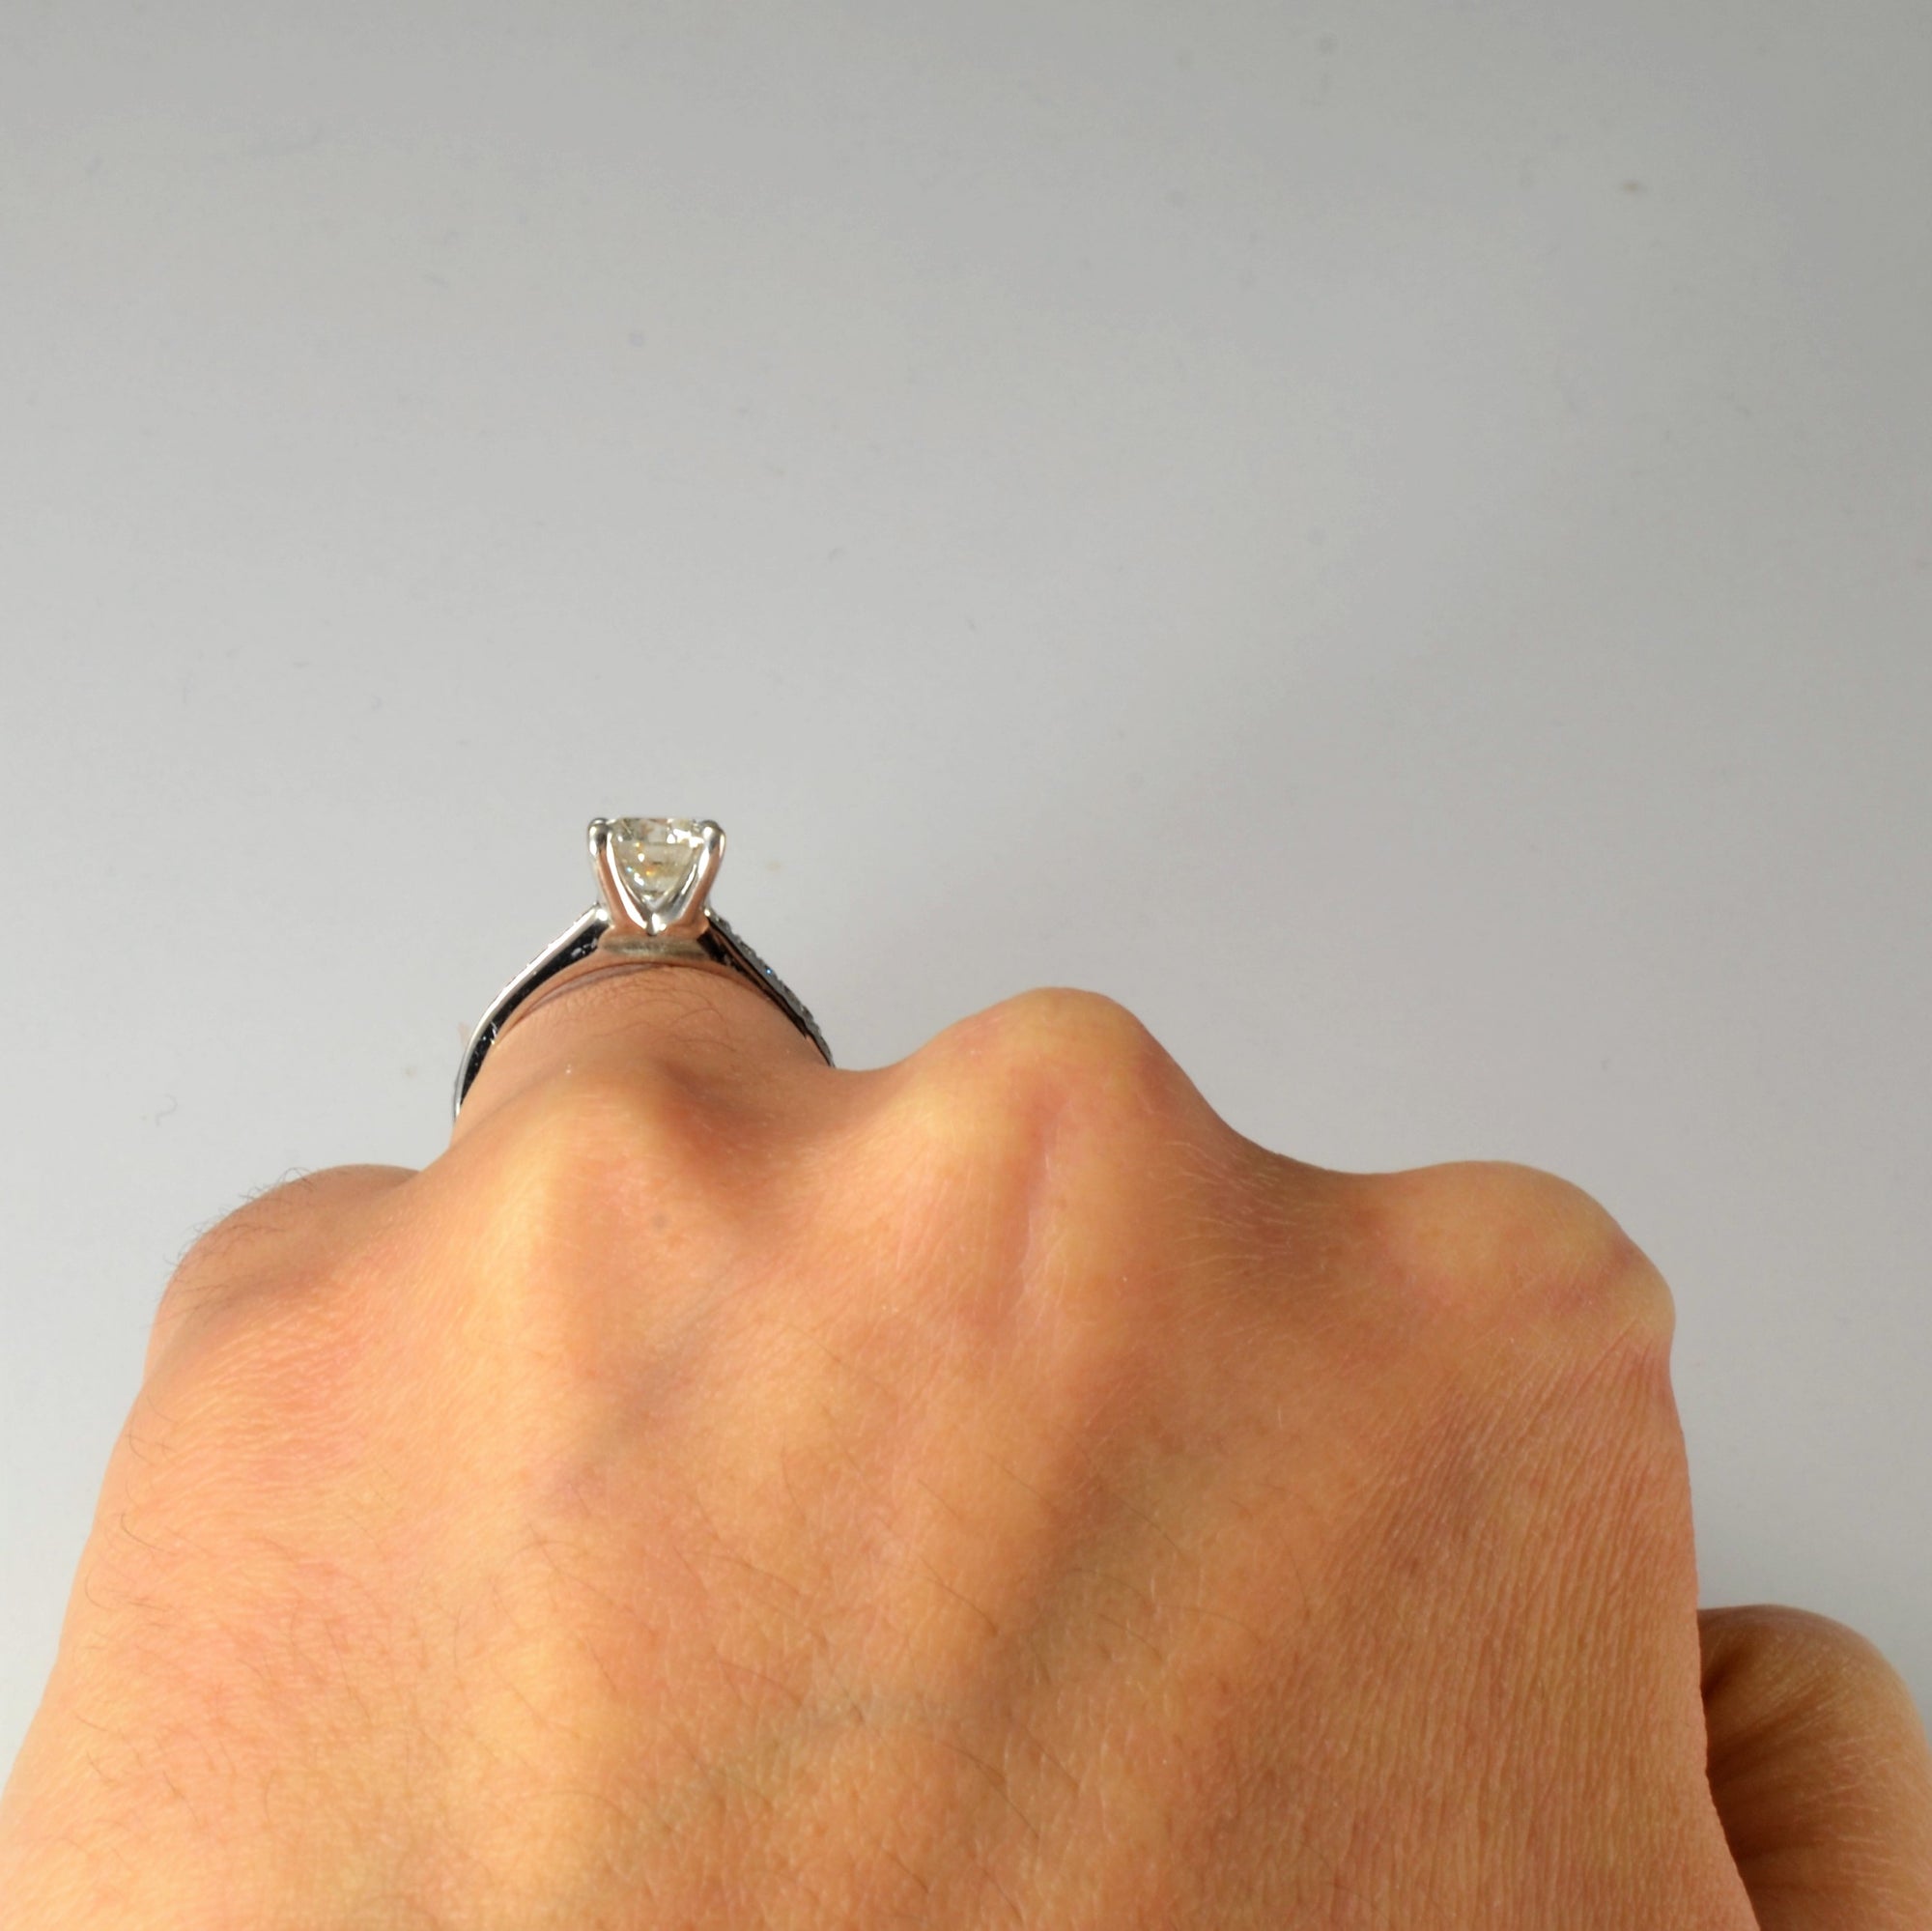 Pave Band Diamond Engagement Ring | 1.22ctw | SZ 5.25 |